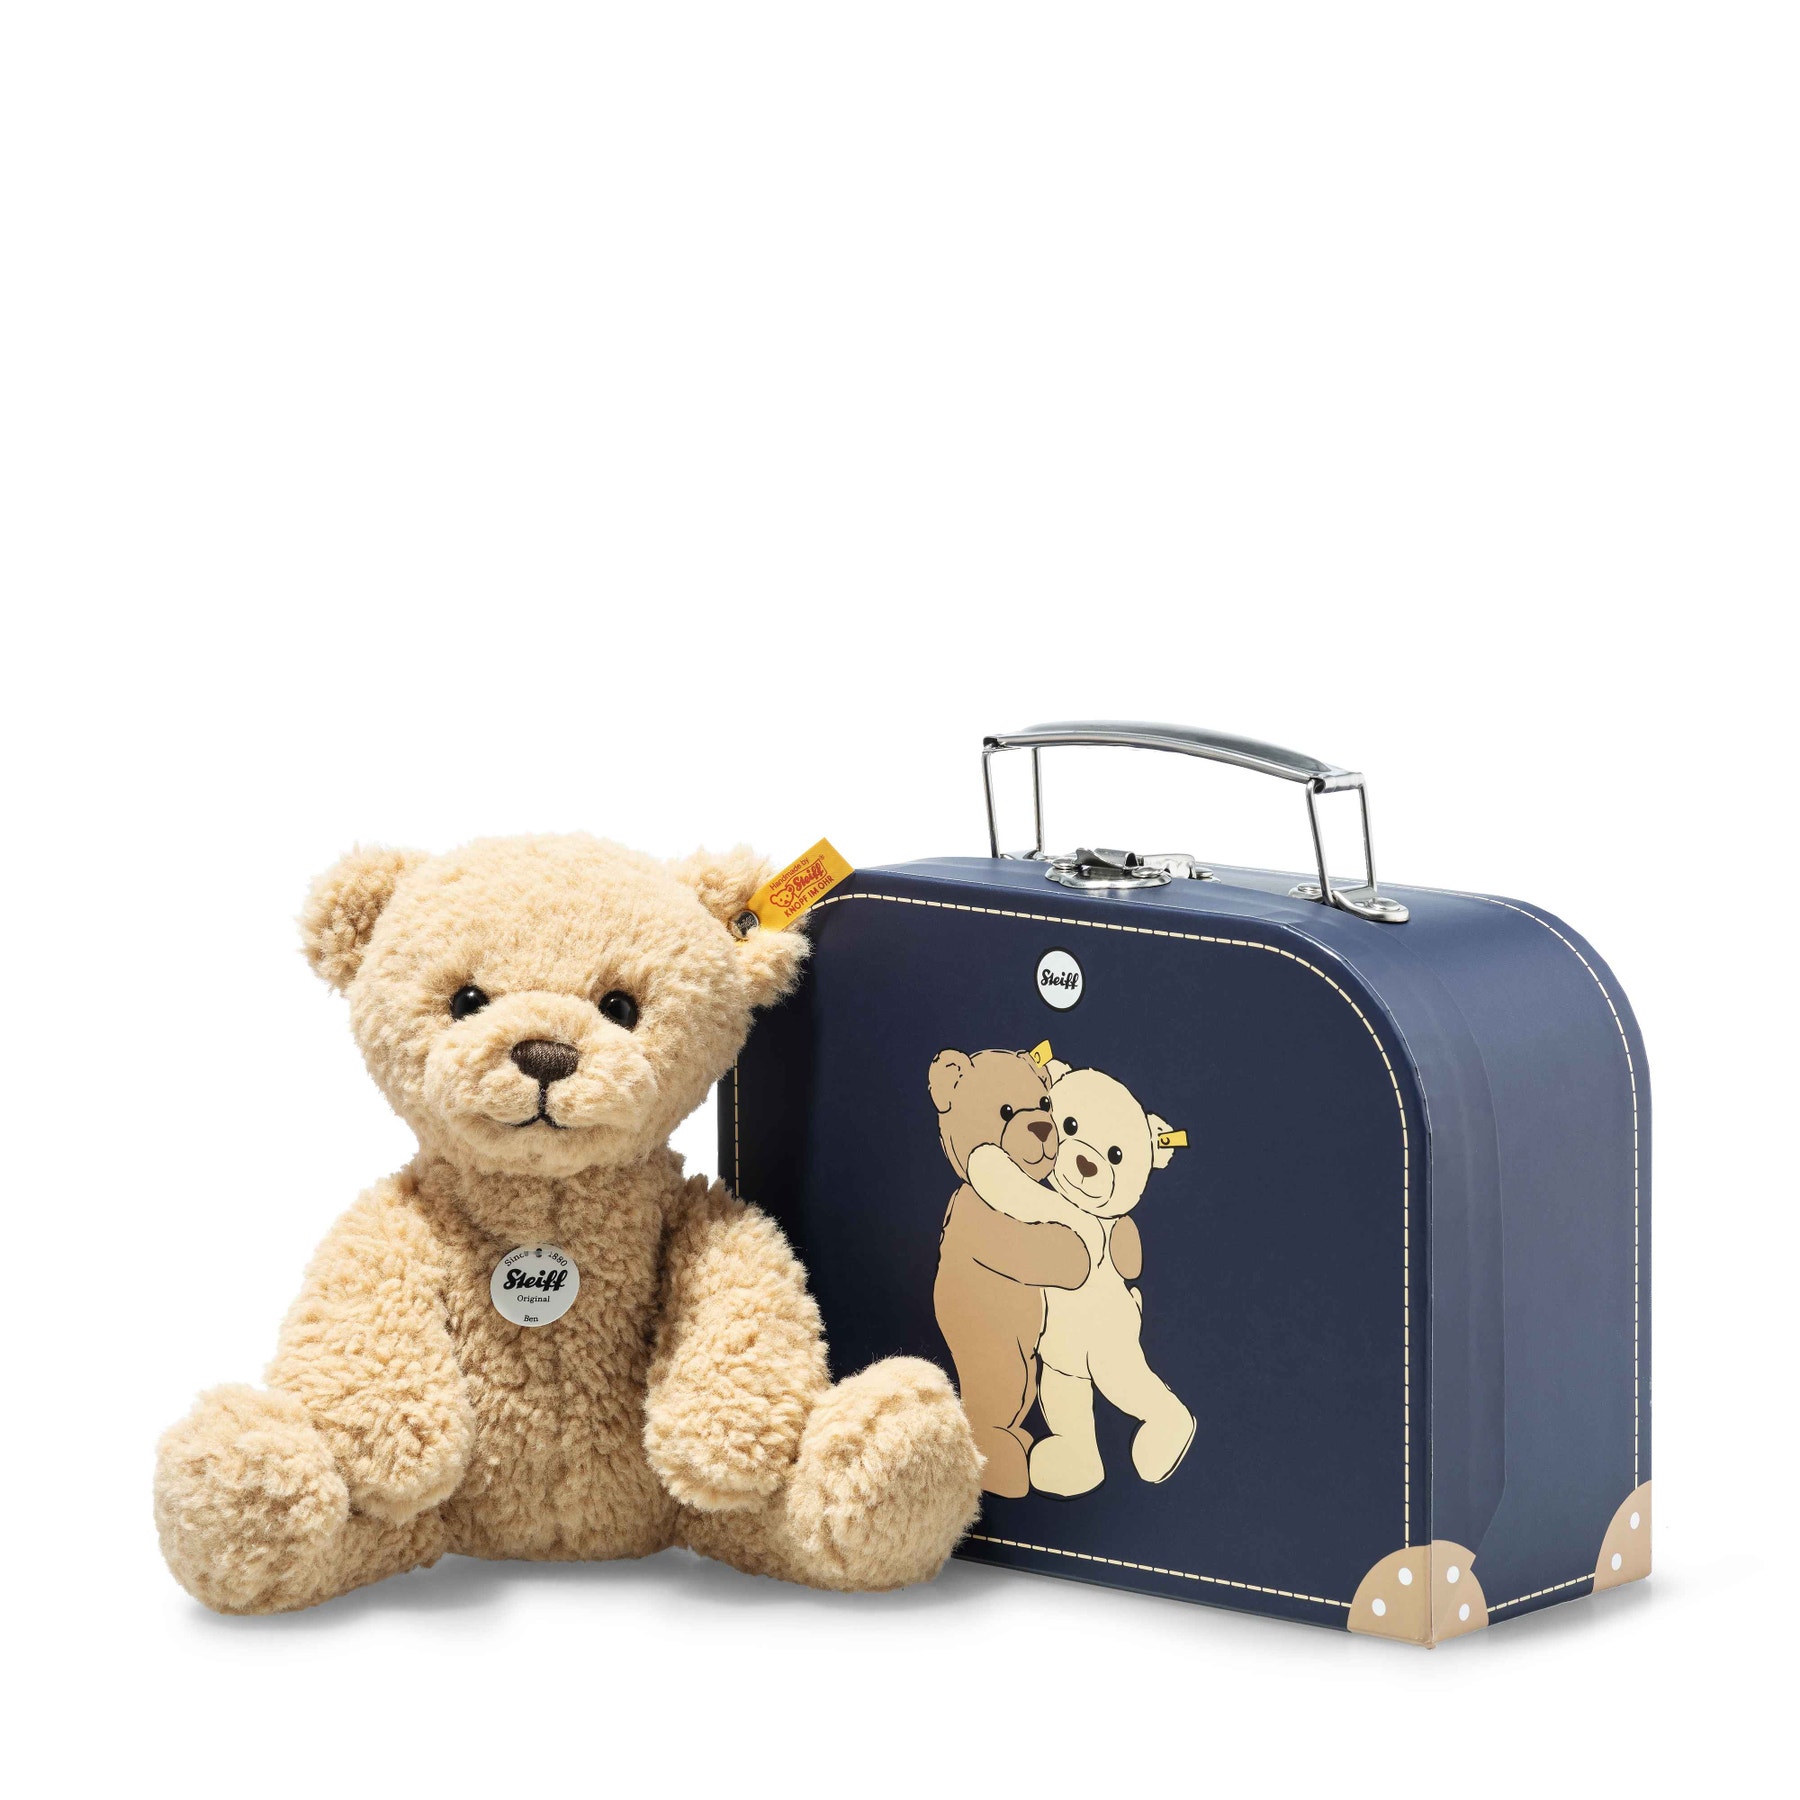 Ours Teddy Ben dans sa valise